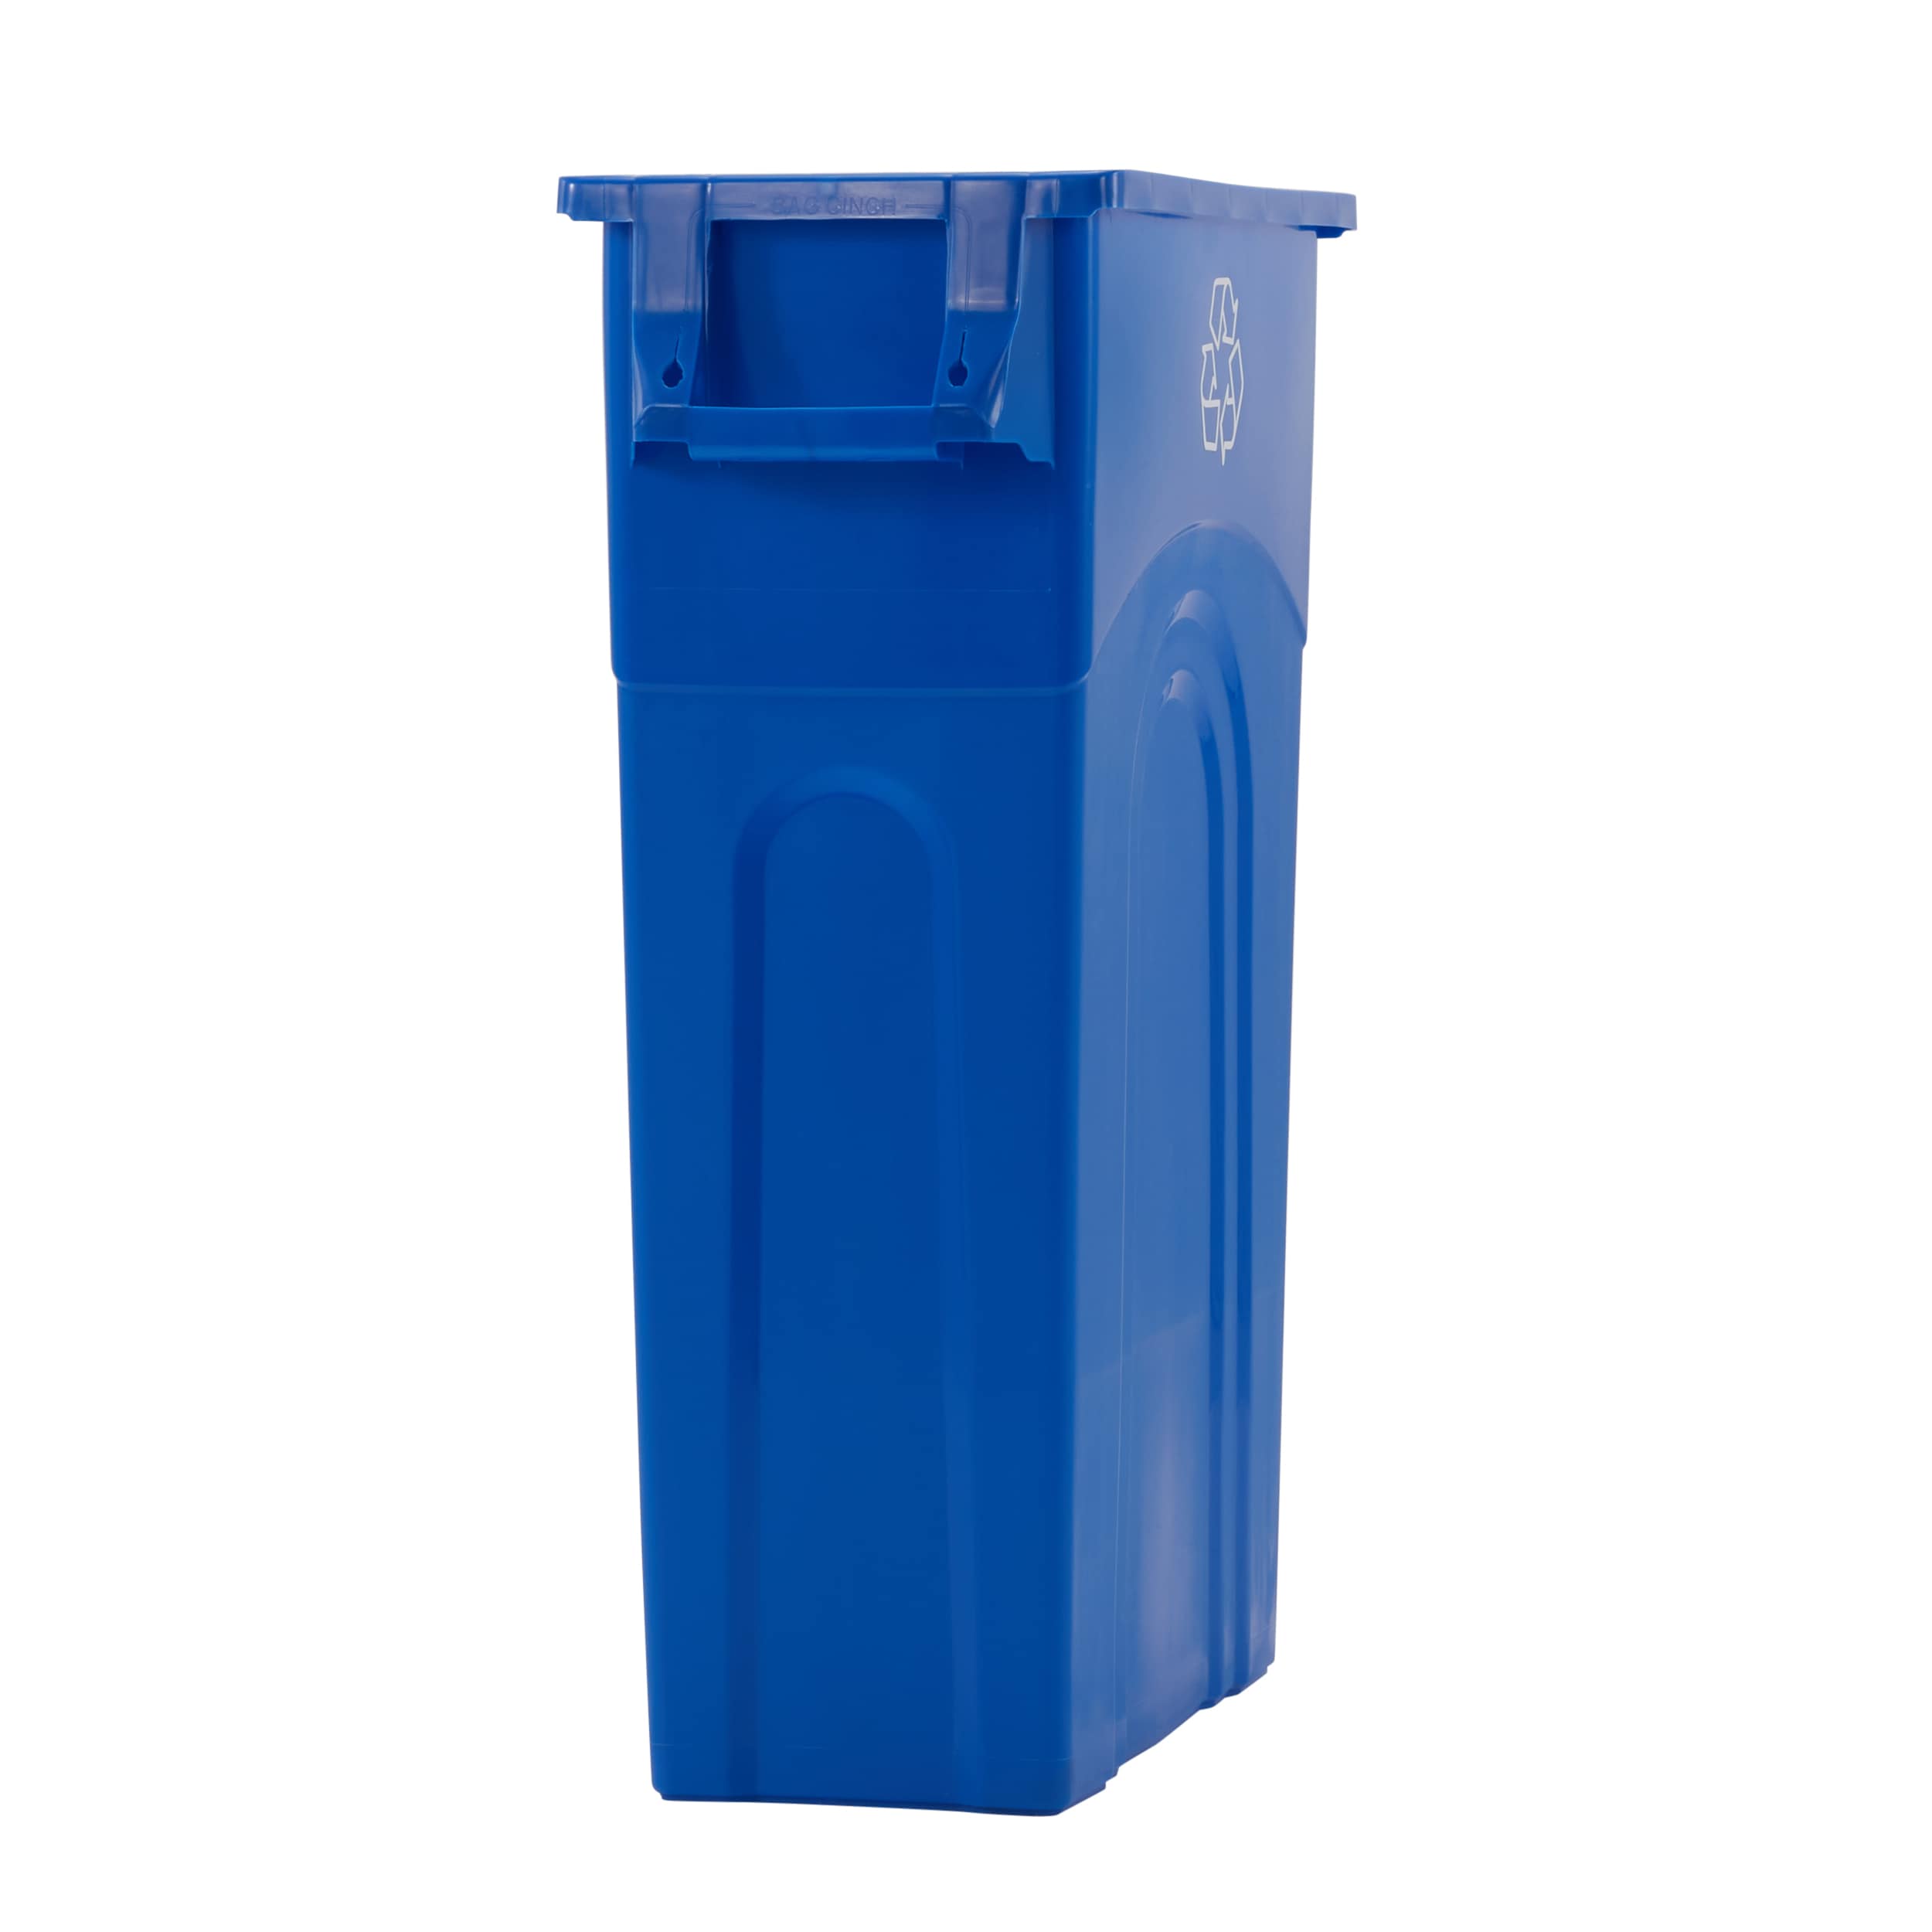 Global Industrial™ Slim Trash Can, 23 Gallon, Blue